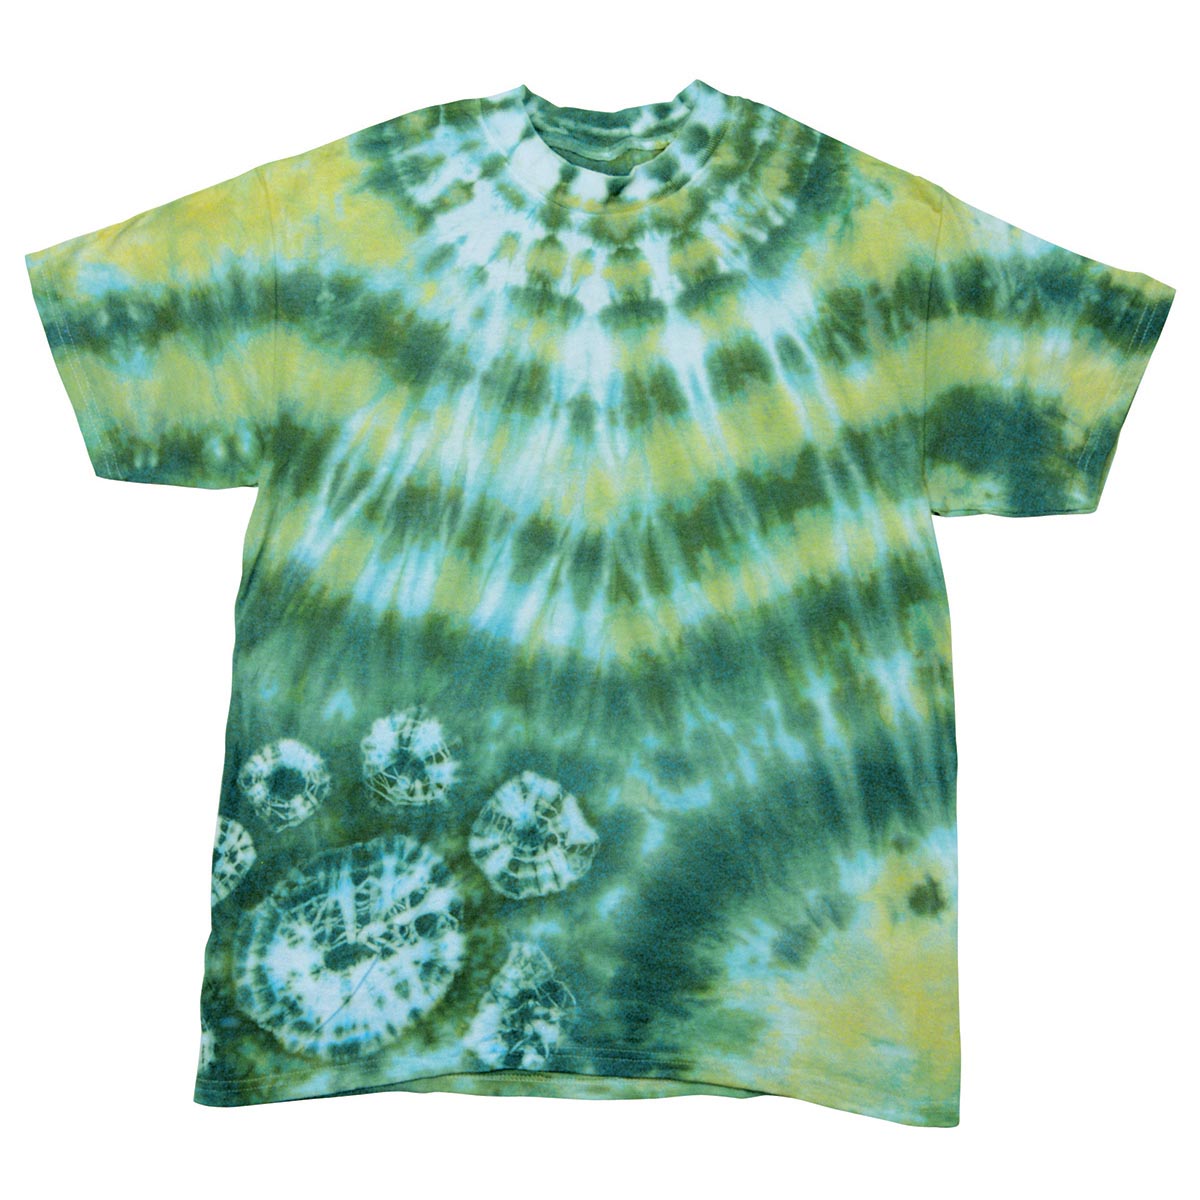 Jacquard  Tie-Dye Kit for T-Shirts - Emerald Jewel Tone